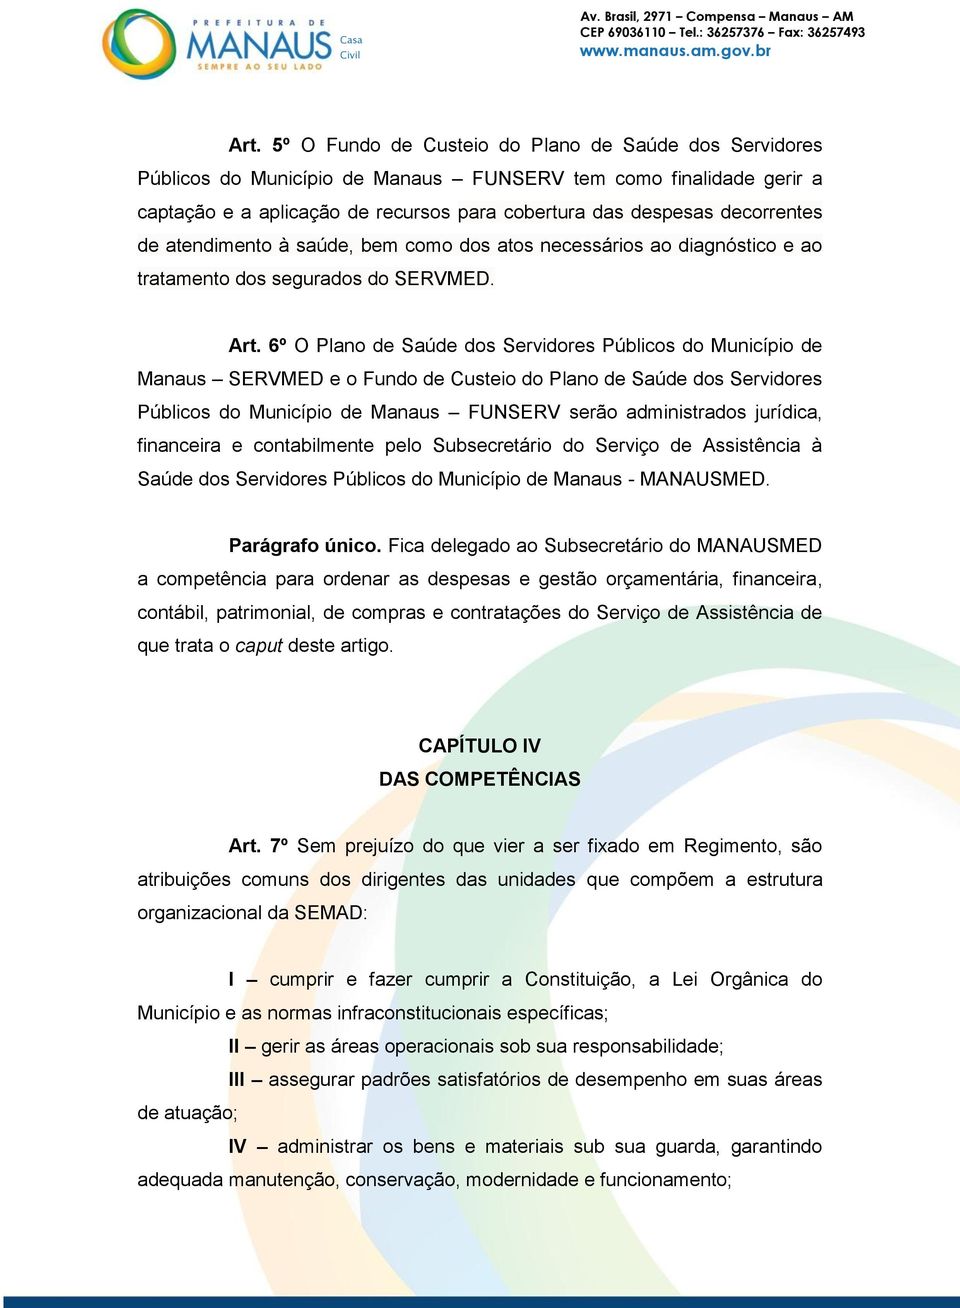 6º O Plano de Saúde dos Servidores Públicos do Município de Manaus SERVMED e o Fundo de Custeio do Plano de Saúde dos Servidores Públicos do Município de Manaus FUNSERV serão administrados jurídica,